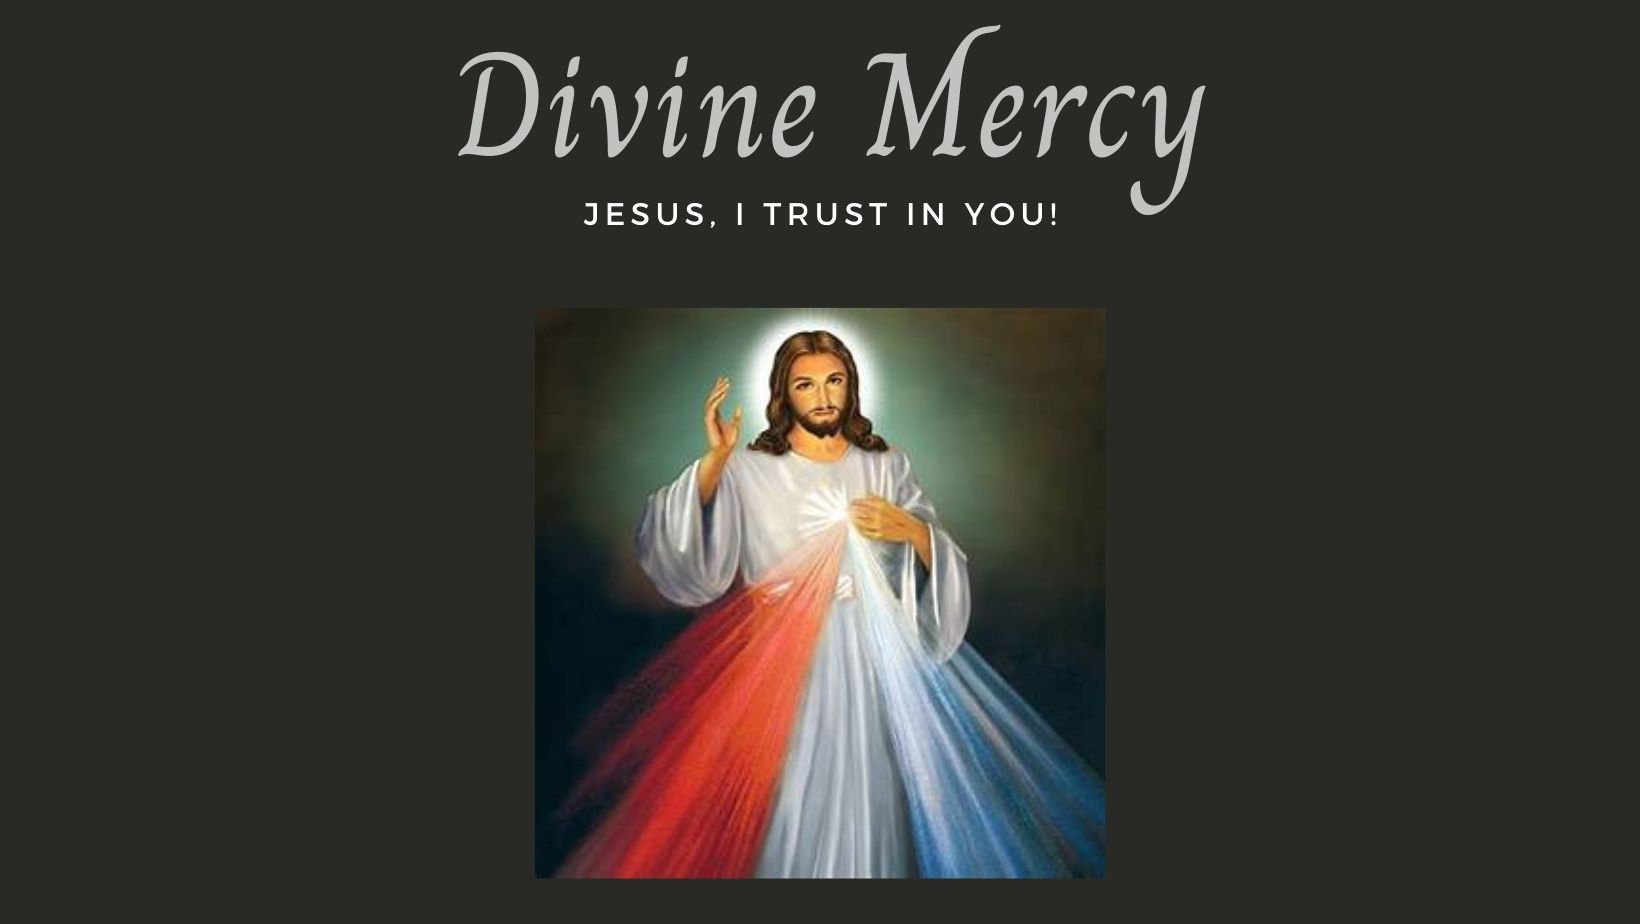 Divine Mercy Holy Hour